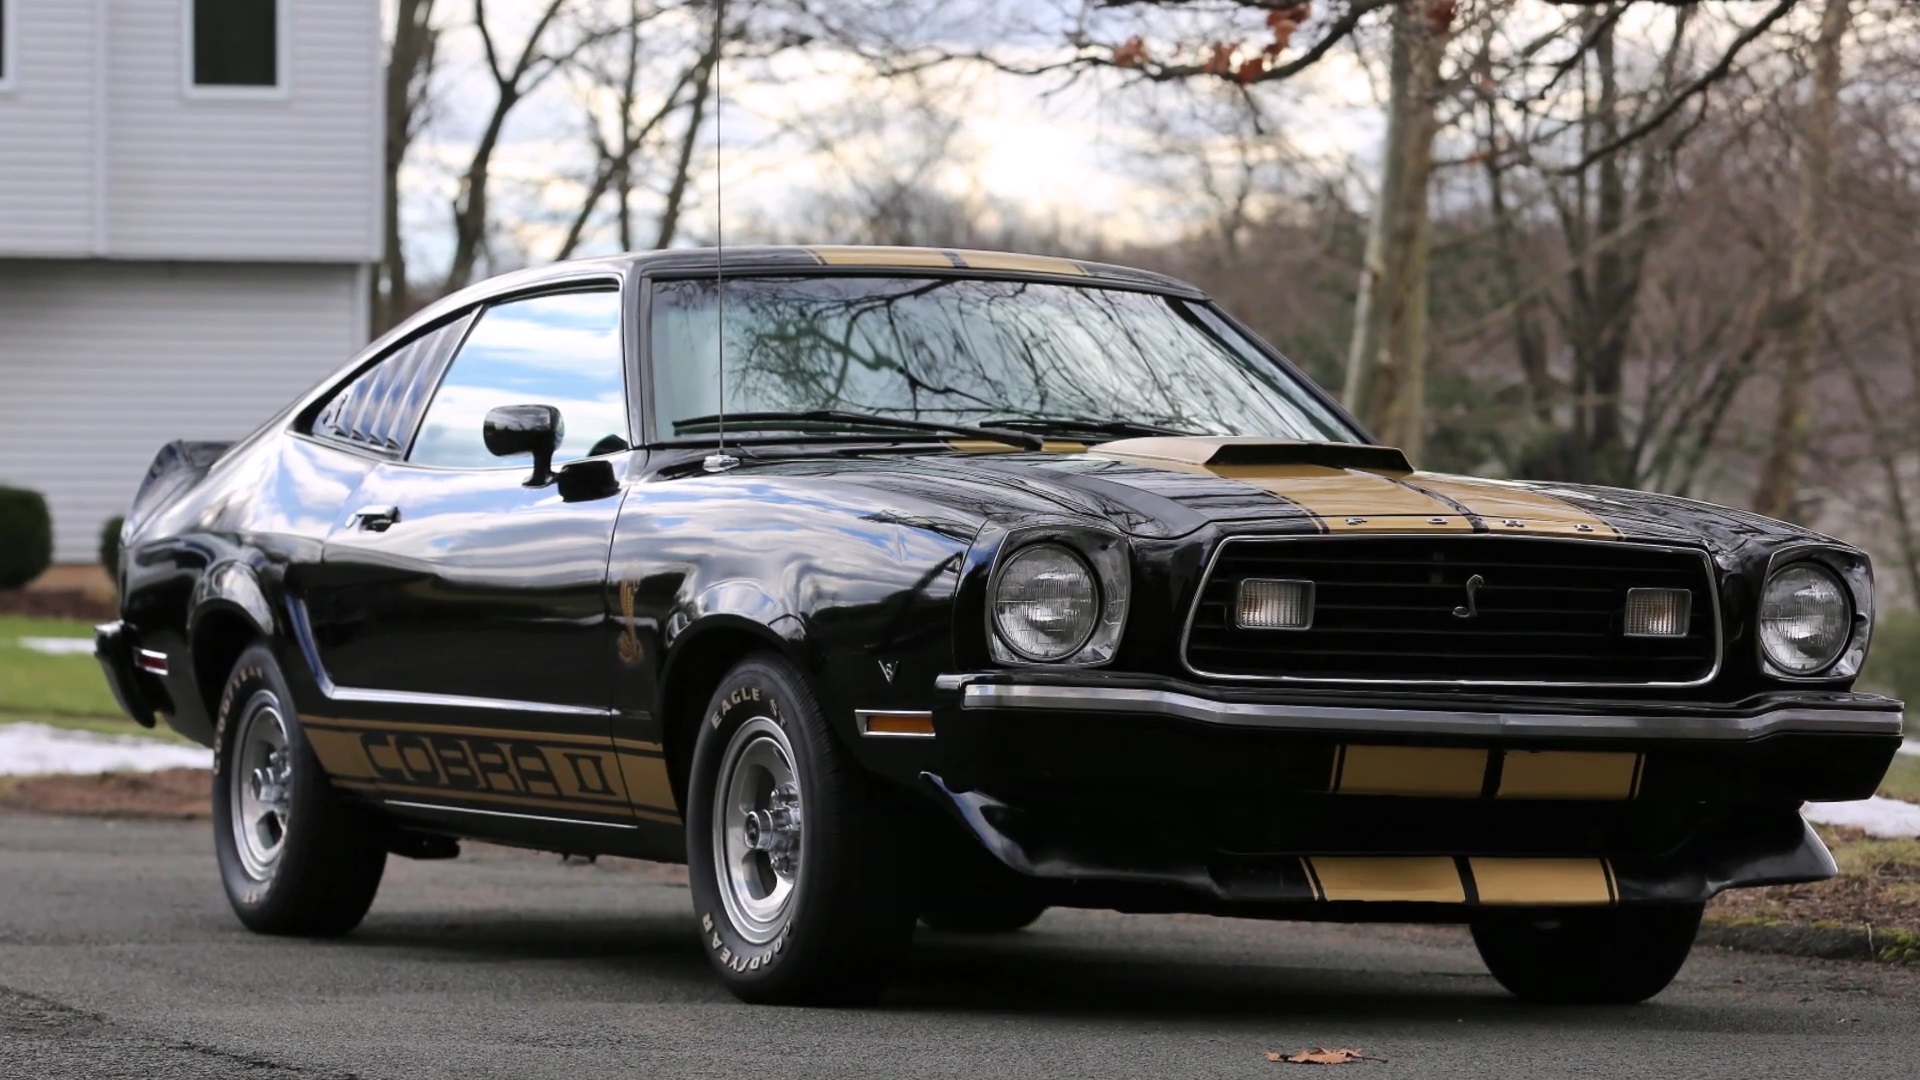 Video: 1976 Ford Mustang Cobra II Walkaround